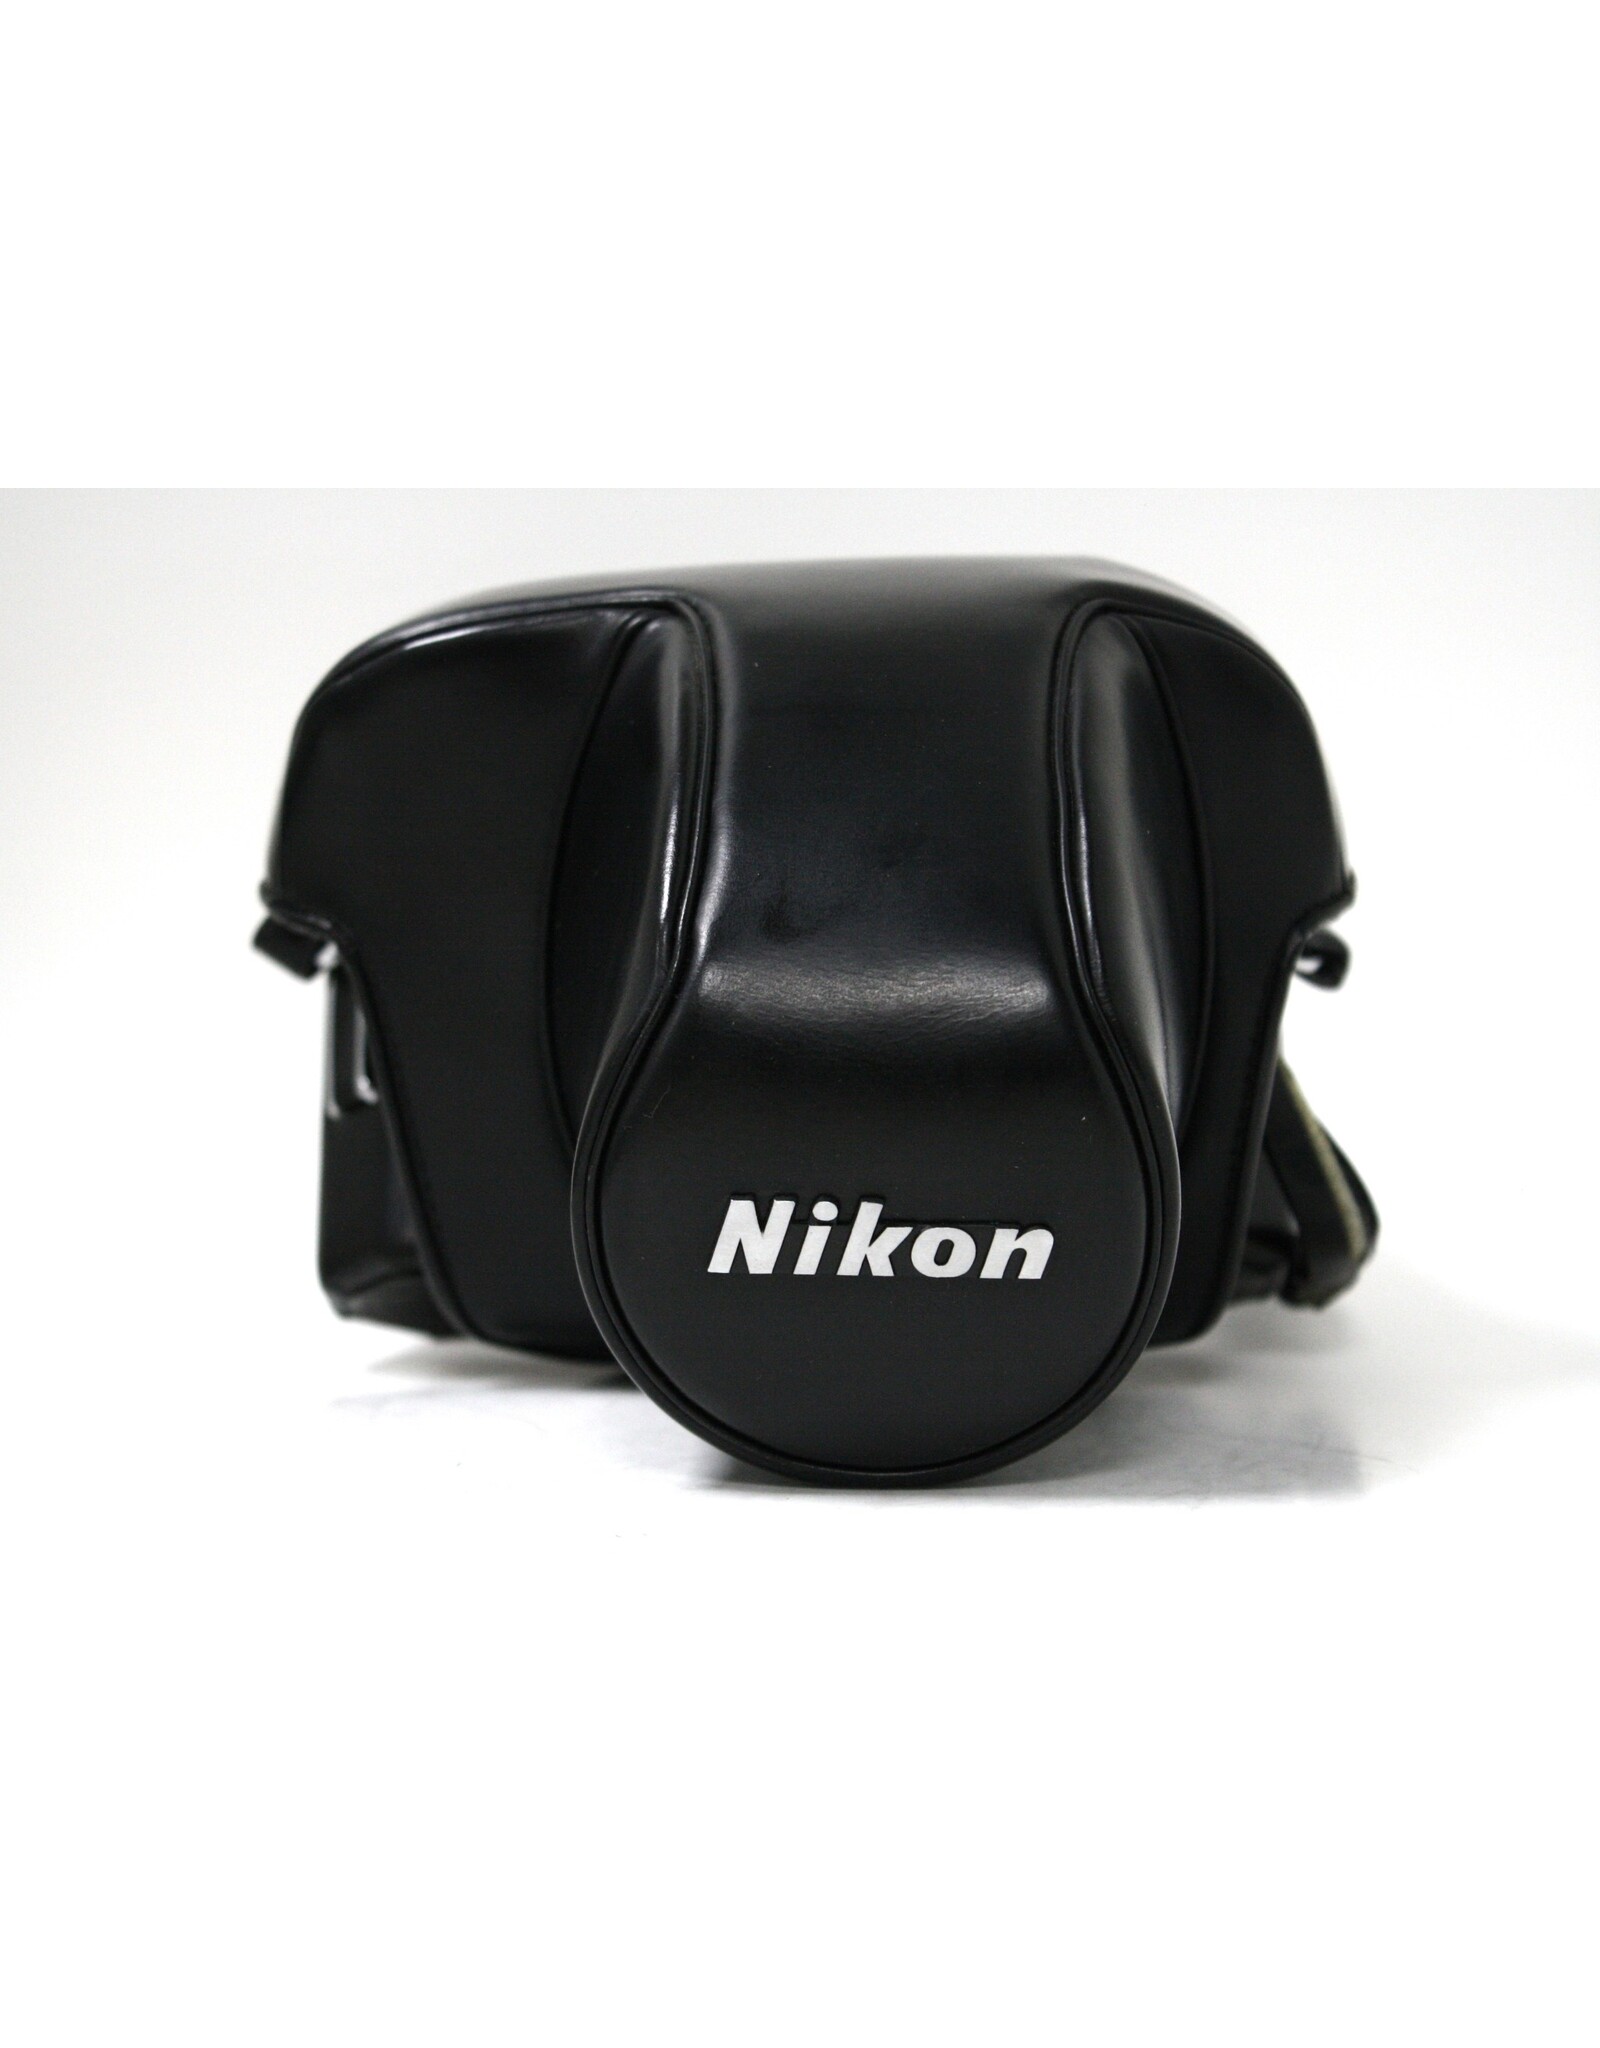 Nikon Nikon CH-1 Hard Case for Nikon F2 (Pre-Owned)